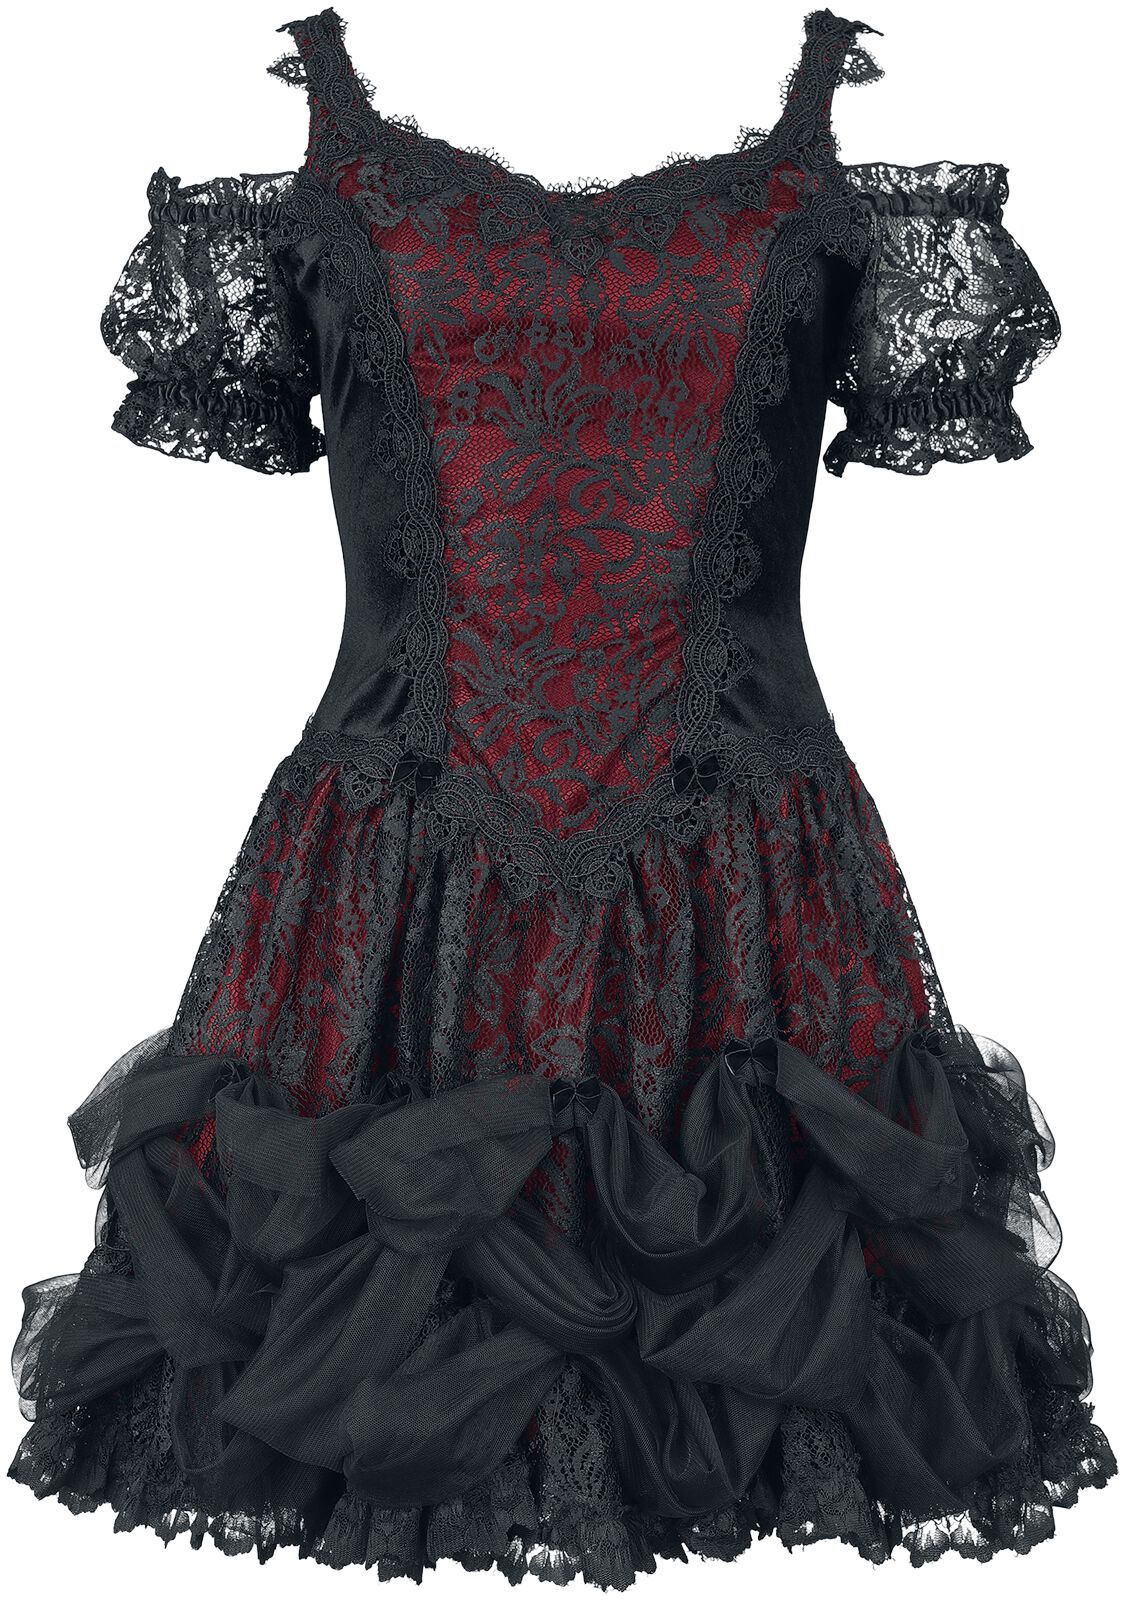 Image of Miniabito Gothic di Sinister Gothic - Gothic Dress - S a XXL - Donna - nero/rosso